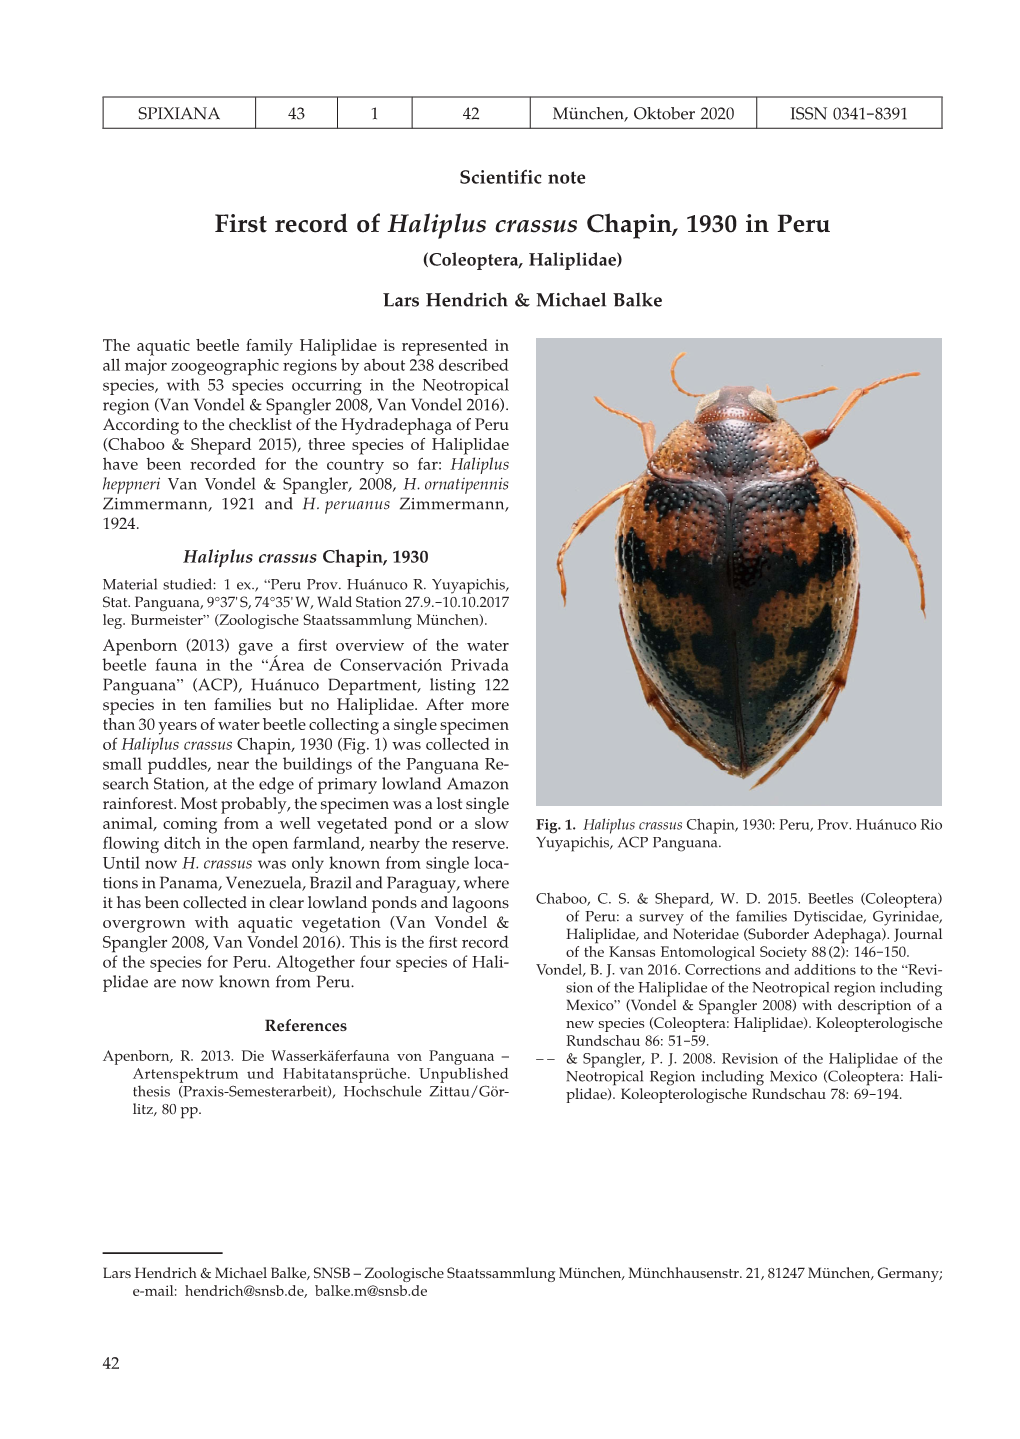 First Record of Haliplus Crassus Chapin, 1930 in Peru (Coleoptera, Haliplidae)